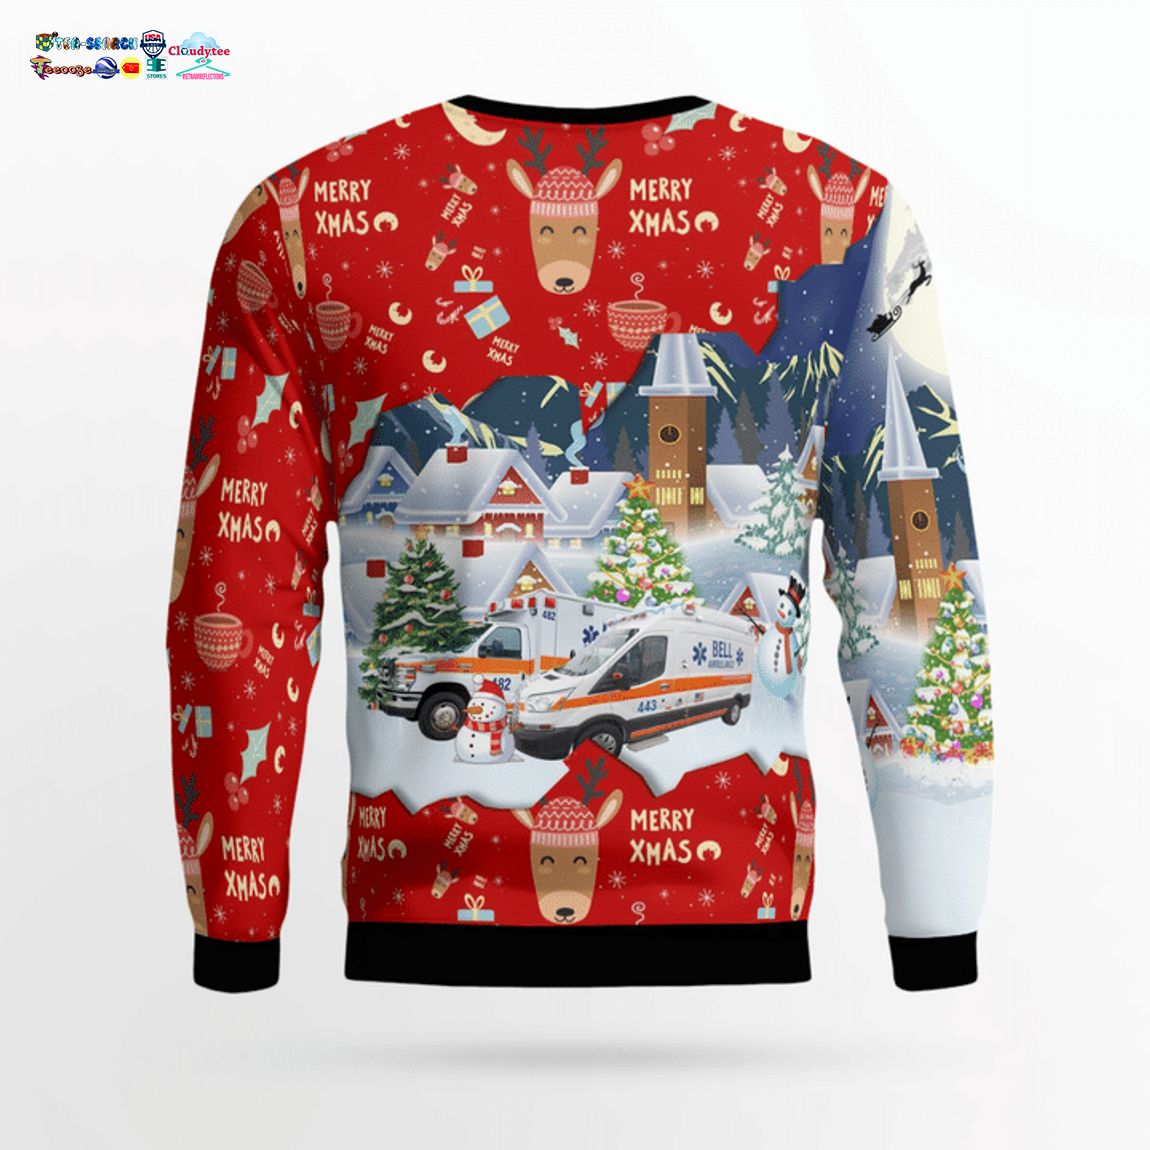 Bell Ambulance Milwaukee Wisconsin 3D Christmas Sweater - Saleoff